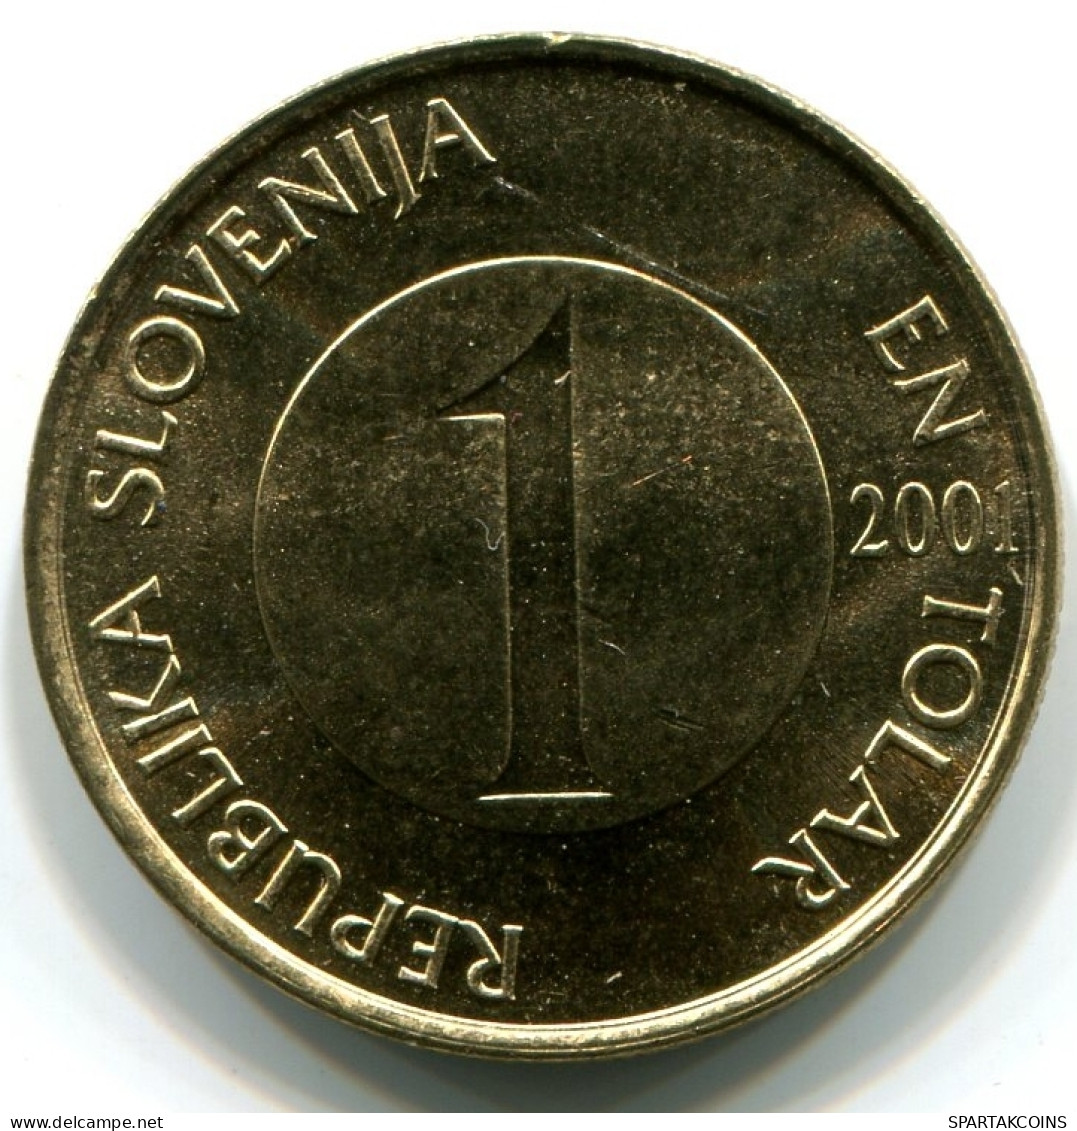 1 TOLAR 2001 SLOVENIA UNC Fish Coin #W11302.U - Slovenië